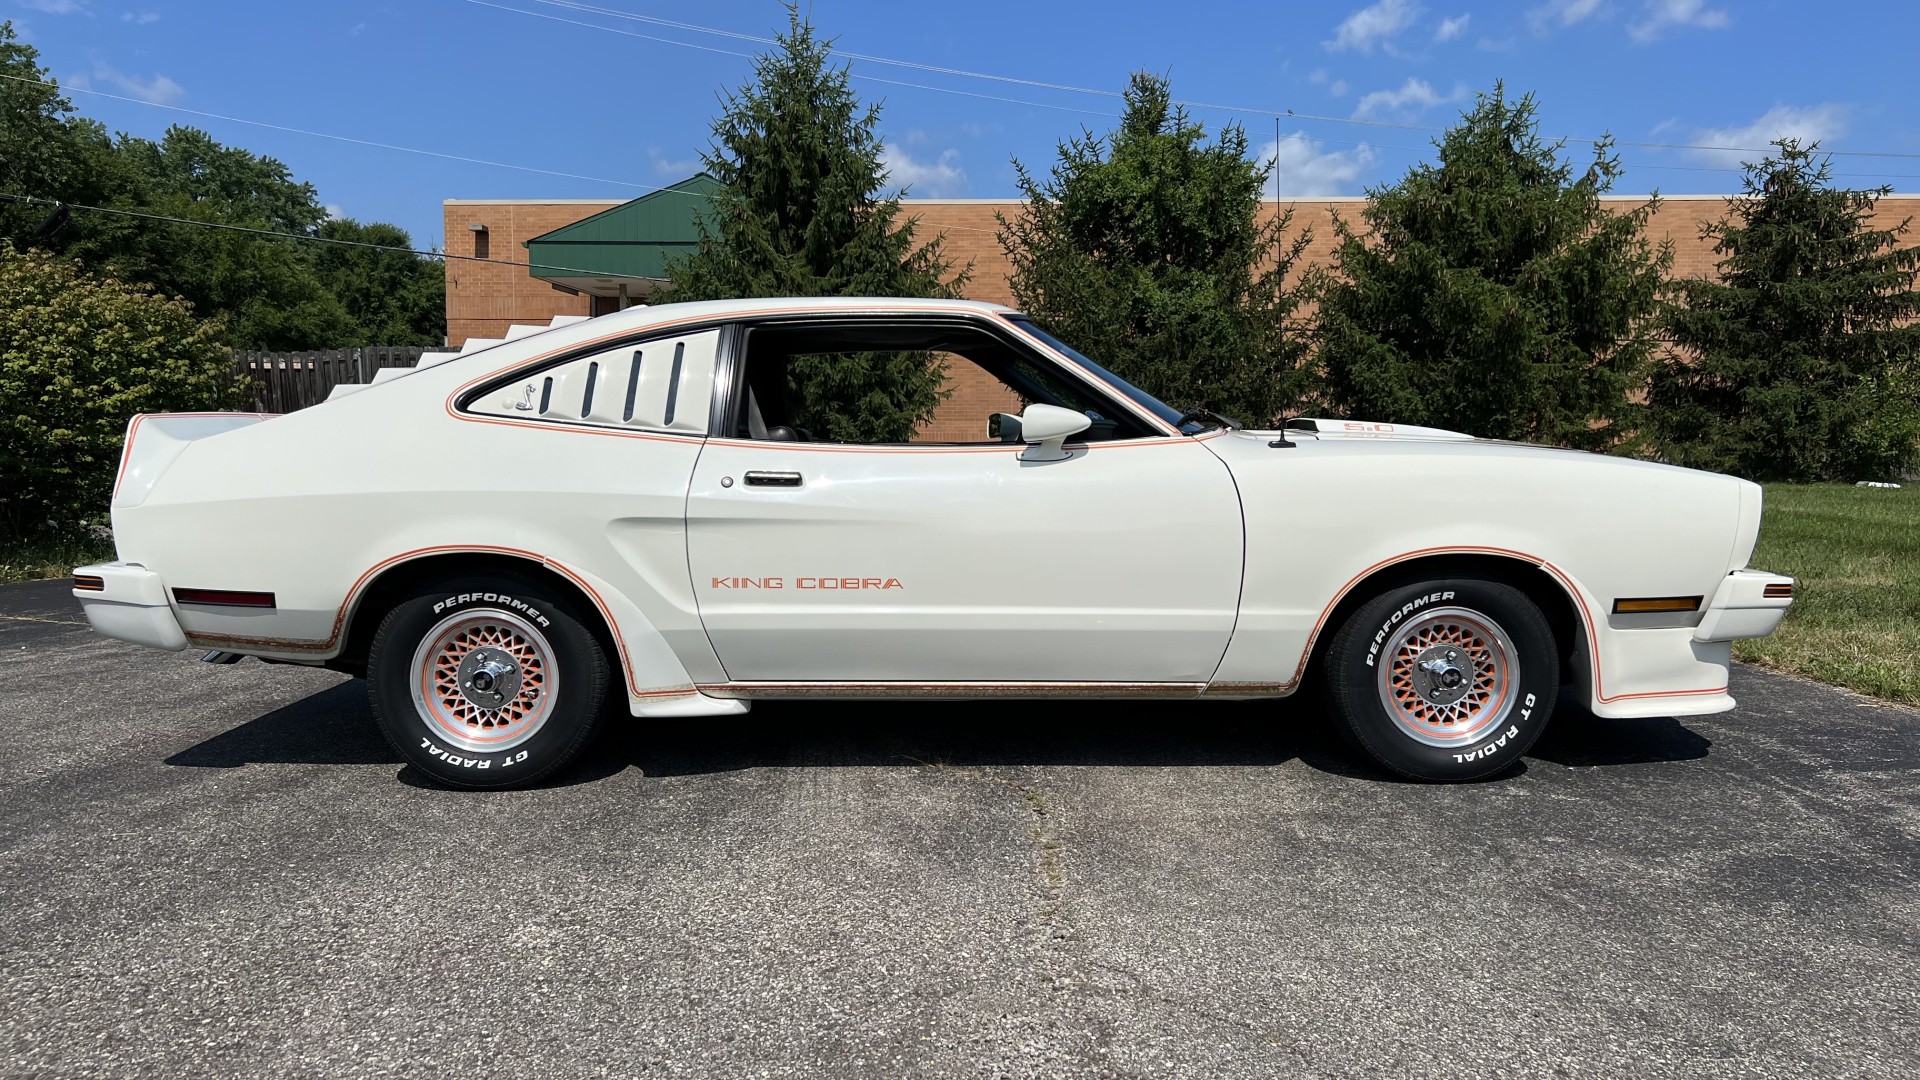 1978 Ford Mustang King Cobra, 72K Miles, Original, 4 Speed, SOLD!